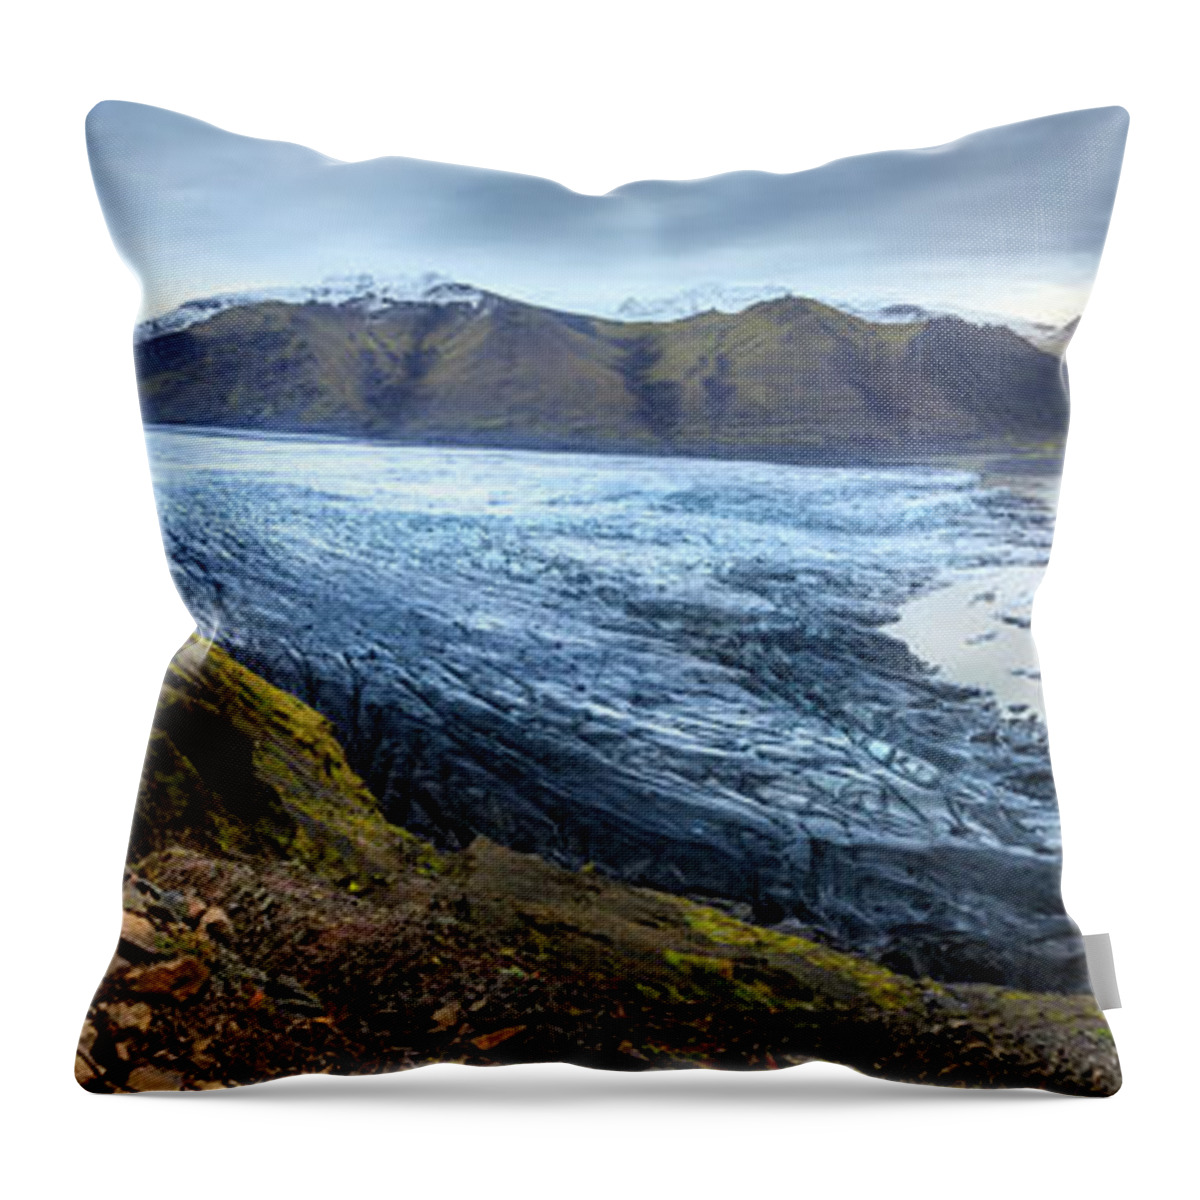 Europe Throw Pillow featuring the photograph Fjallsarlon glacier by Alexey Stiop